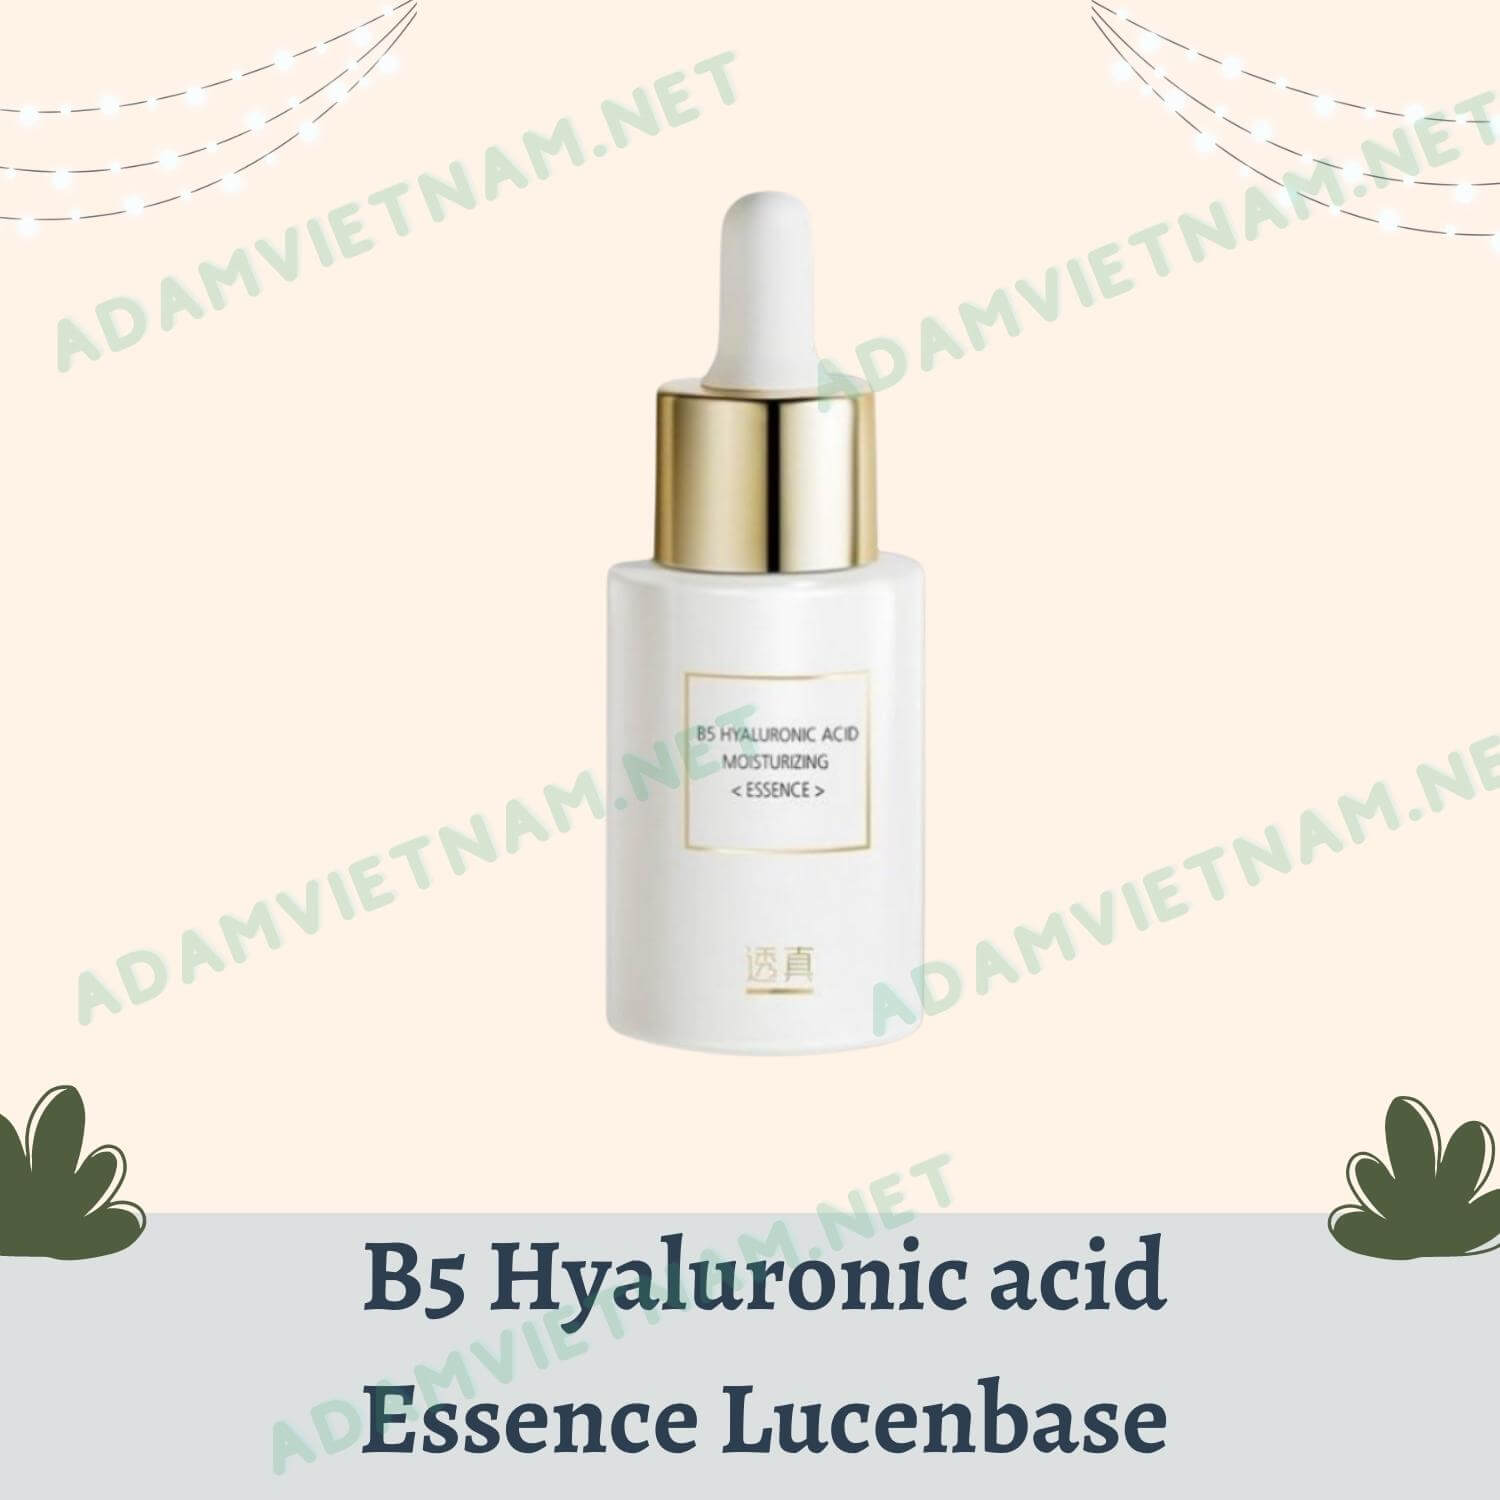 B5 Hyaluronic acid Essence Lucenbase